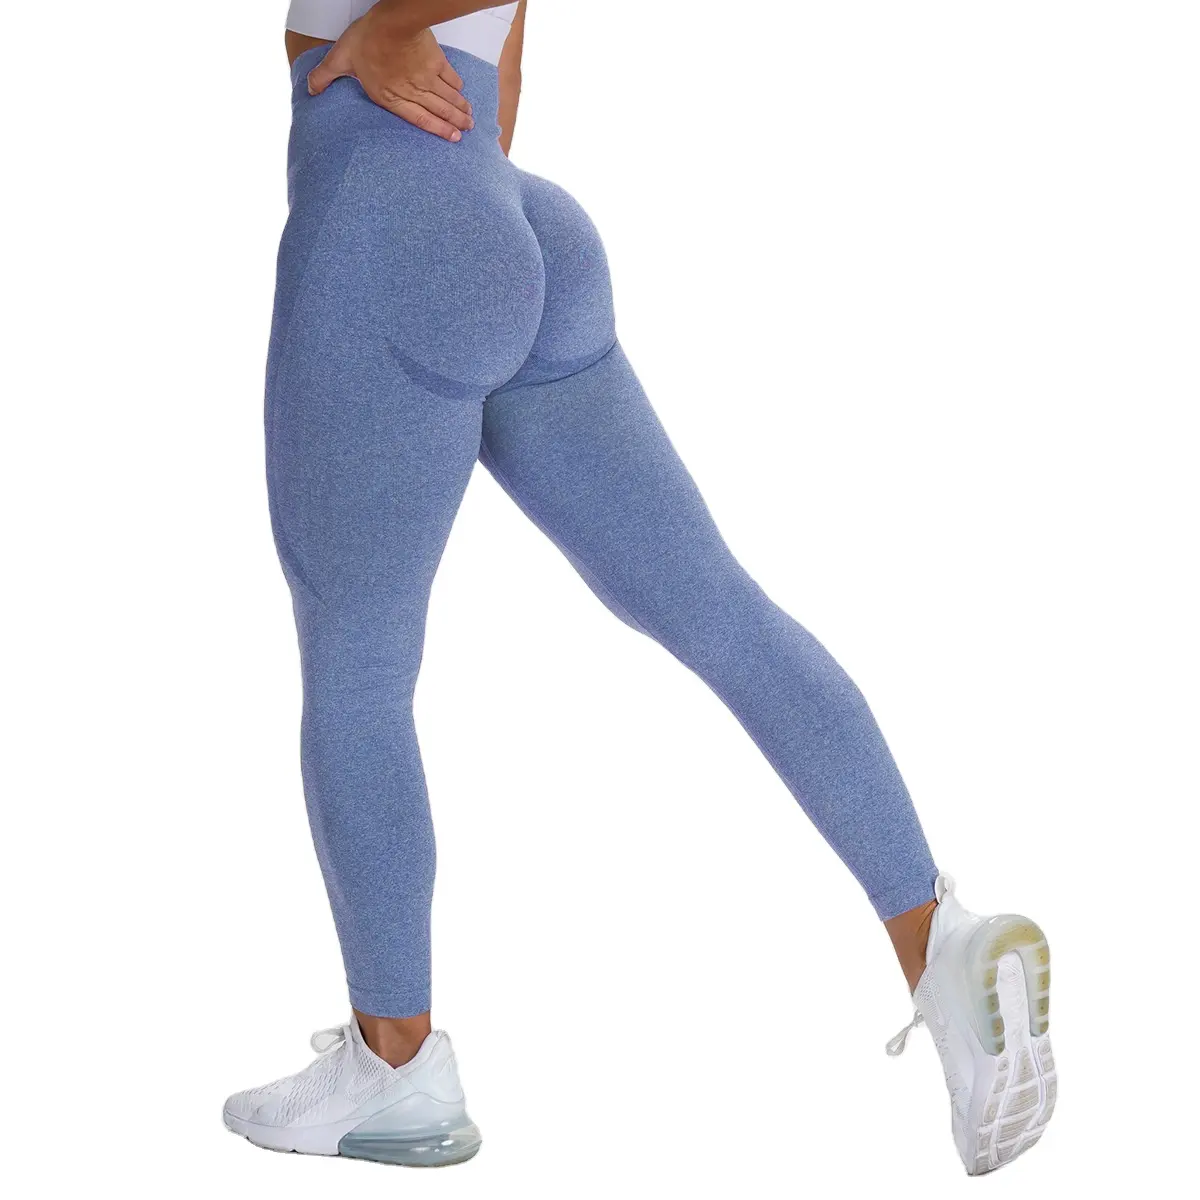 2 Piece Sportswear Clothing tiktok Fitness & Yoga Wear Women's leggings Workout shorts Clothes gym clothing